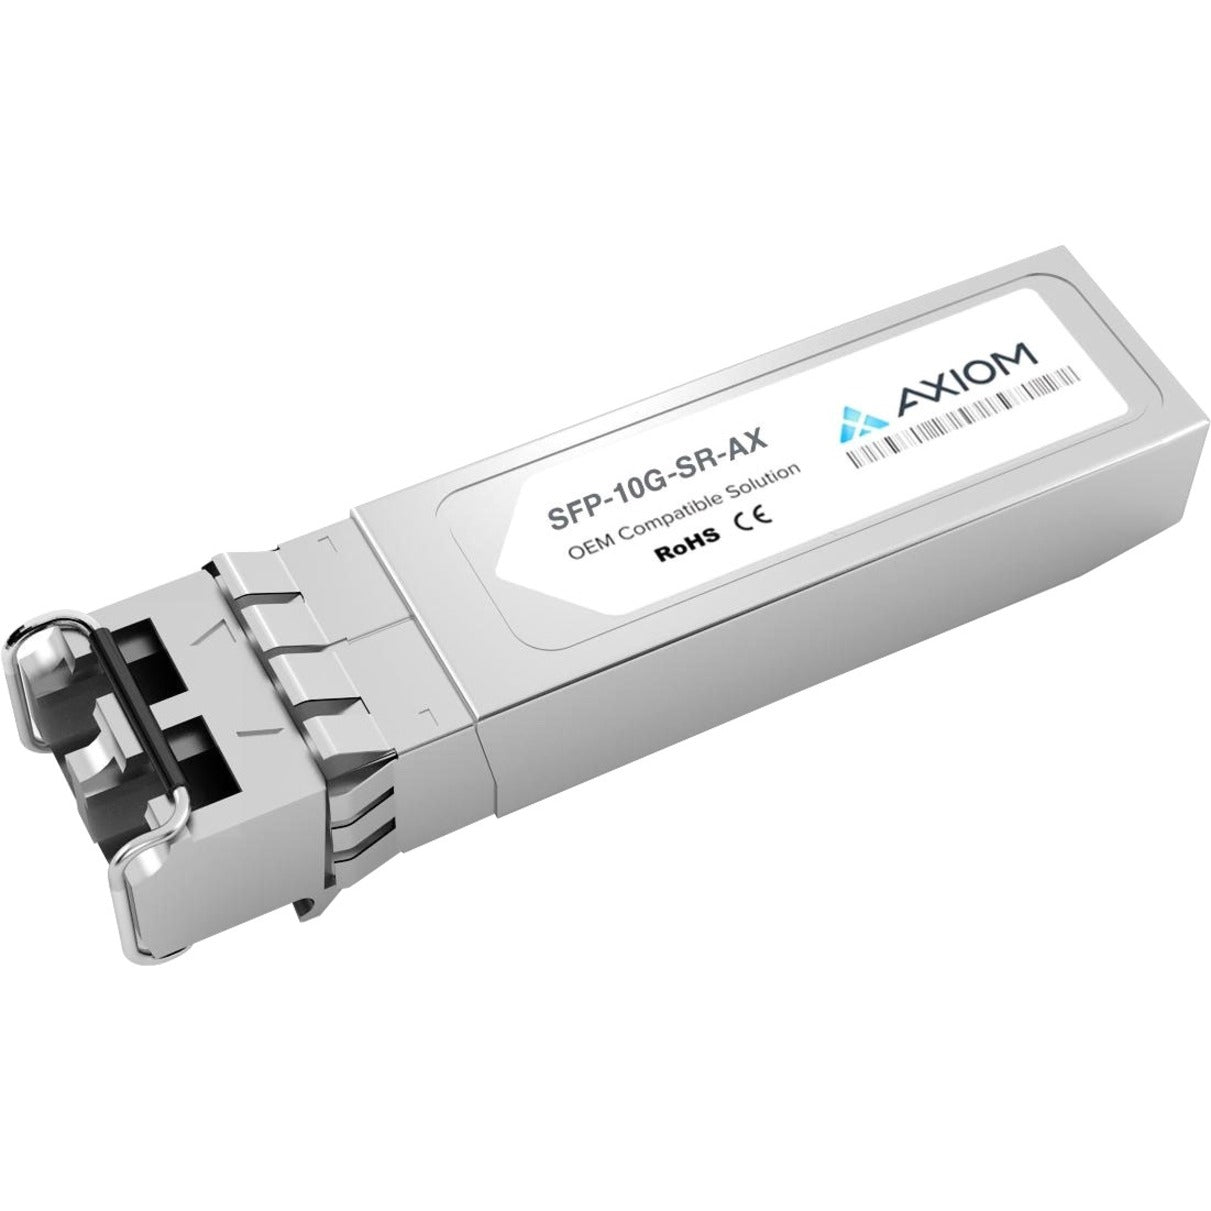 Axiom SFP-10G-SR-AX 10GBASE-SR SFP+ Transceiver for Cisco - High-Speed Data Networking, Multi-mode Fiber, 300m Distance Support